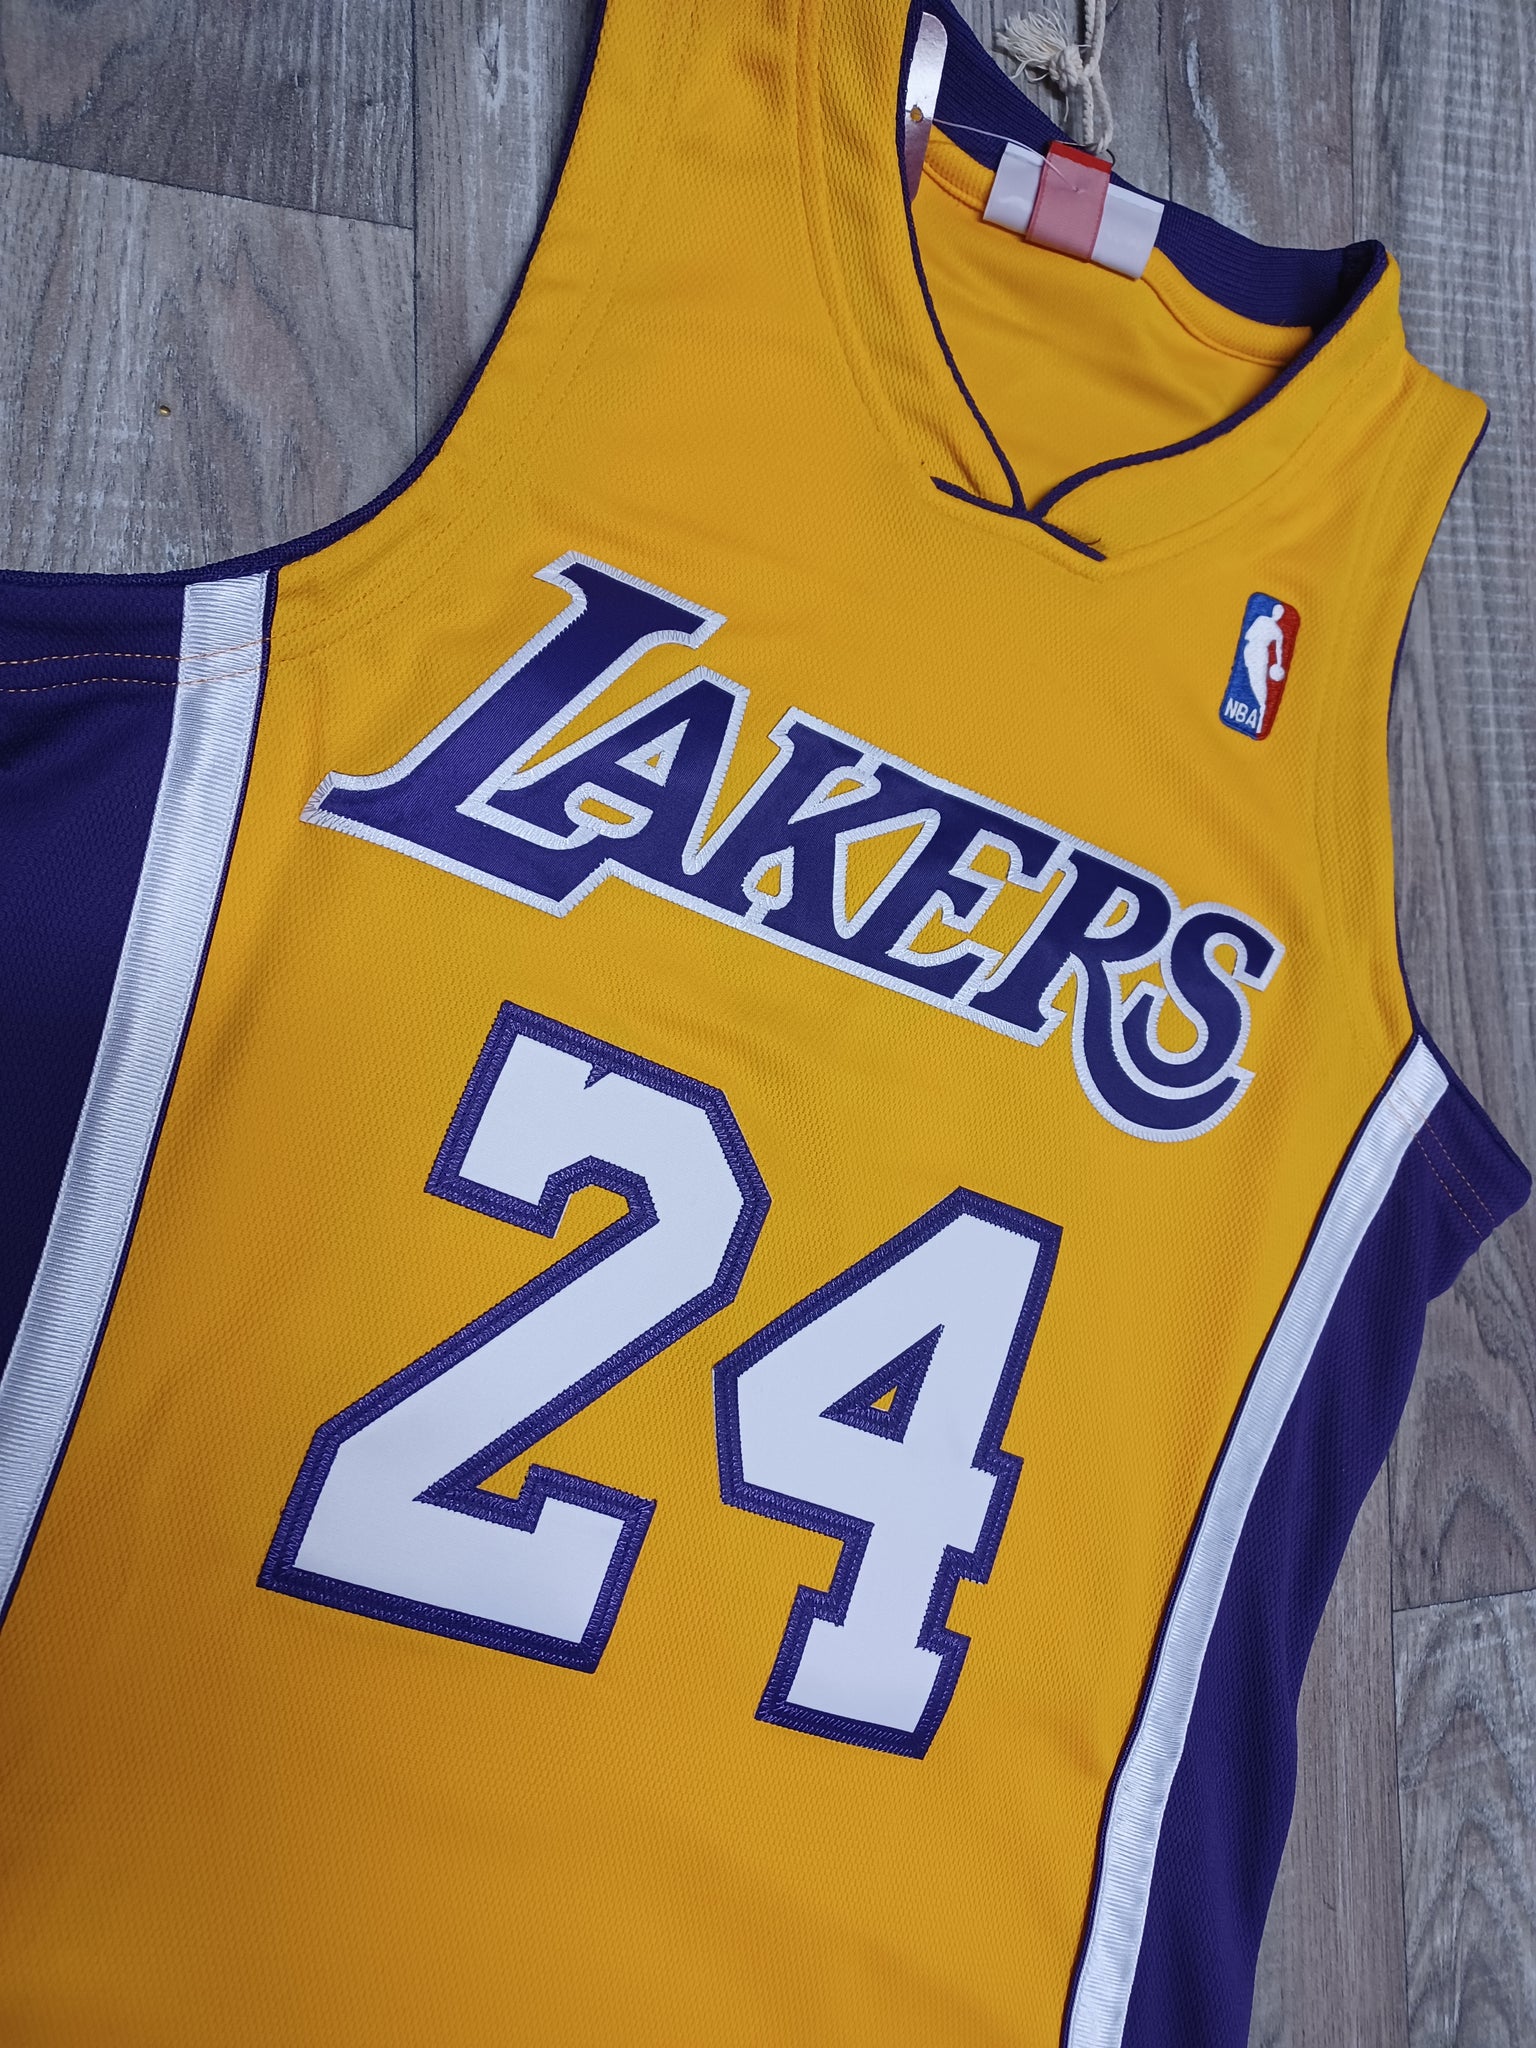 Los Angeles Lakers Kobe Bryant jersey - Adidas (Small) – At the buzzer UK